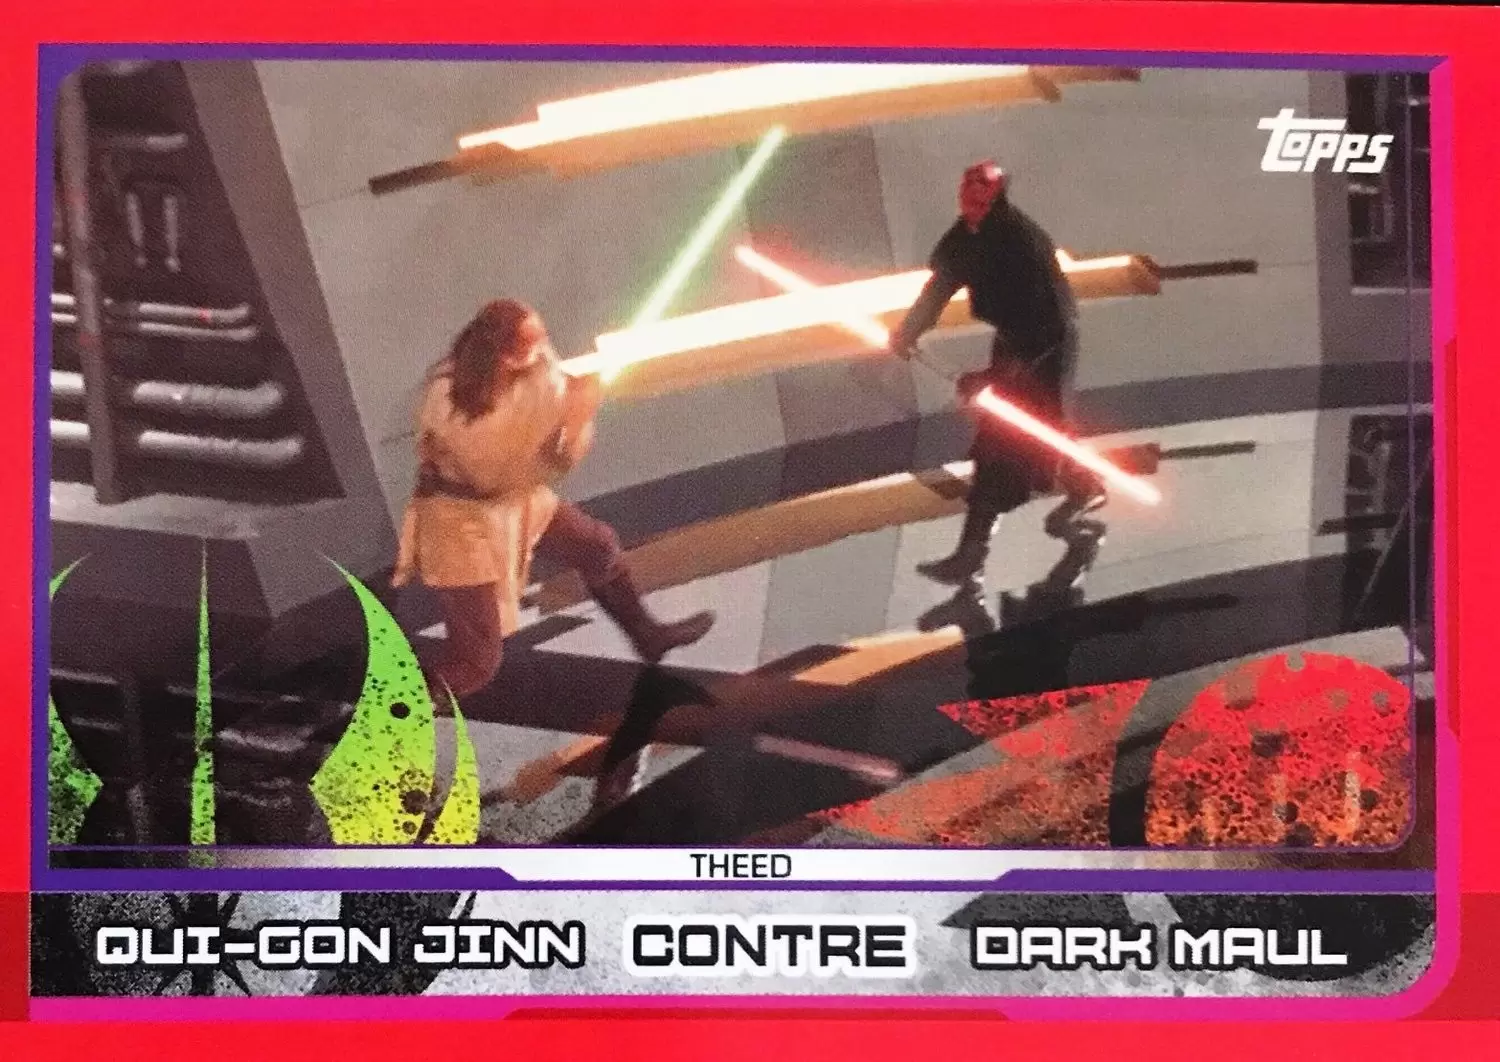 Topps - Voyage vers Star wars : Les Derniers Jedi - Qui-Gon Jinn contre Dark Maul (Theed)